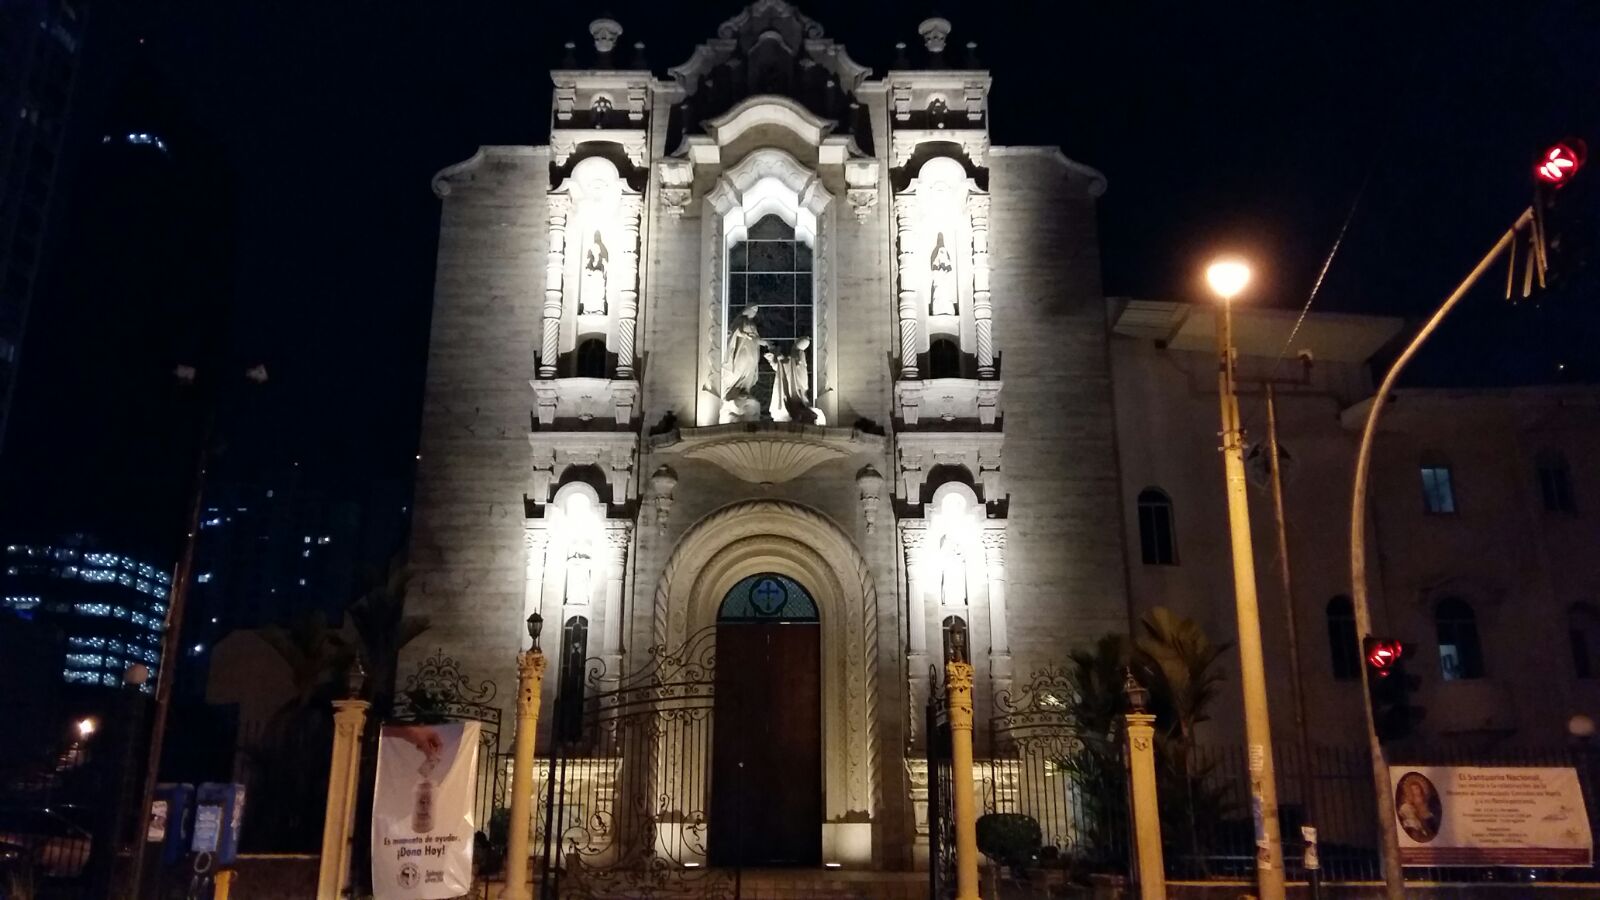 https://audiofotopro.com/wp-content/uploads/2019/05/Iluminación-del-Santuario-Nacional-2-2.jpg